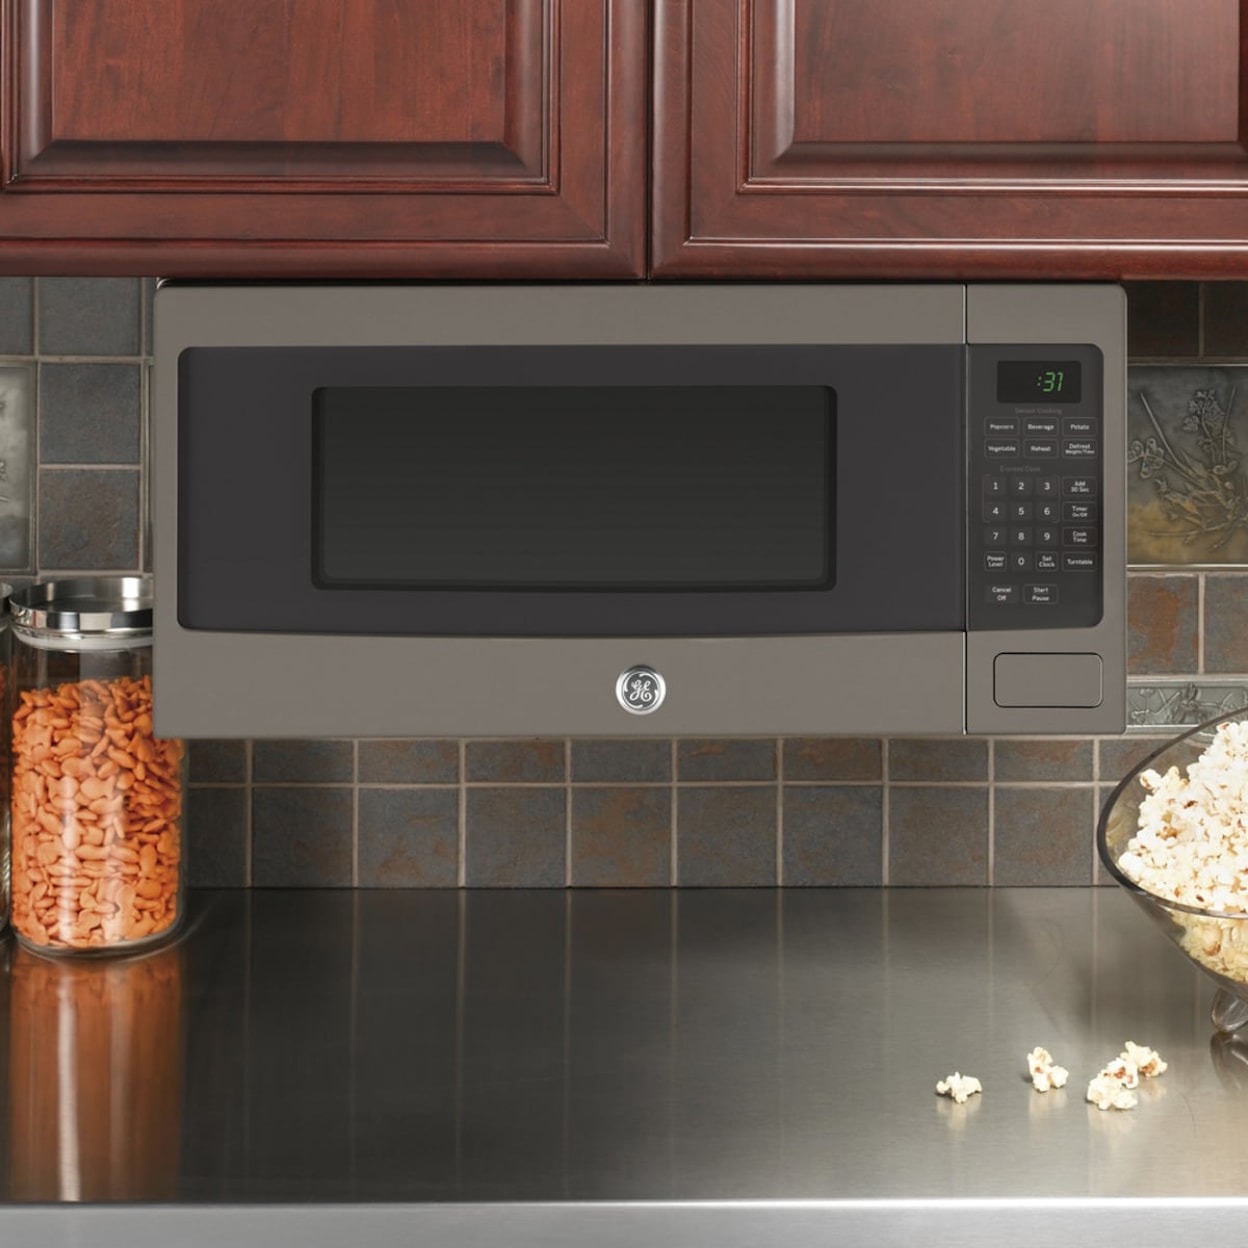 GE Appliances Microwaves Countertop Microwave